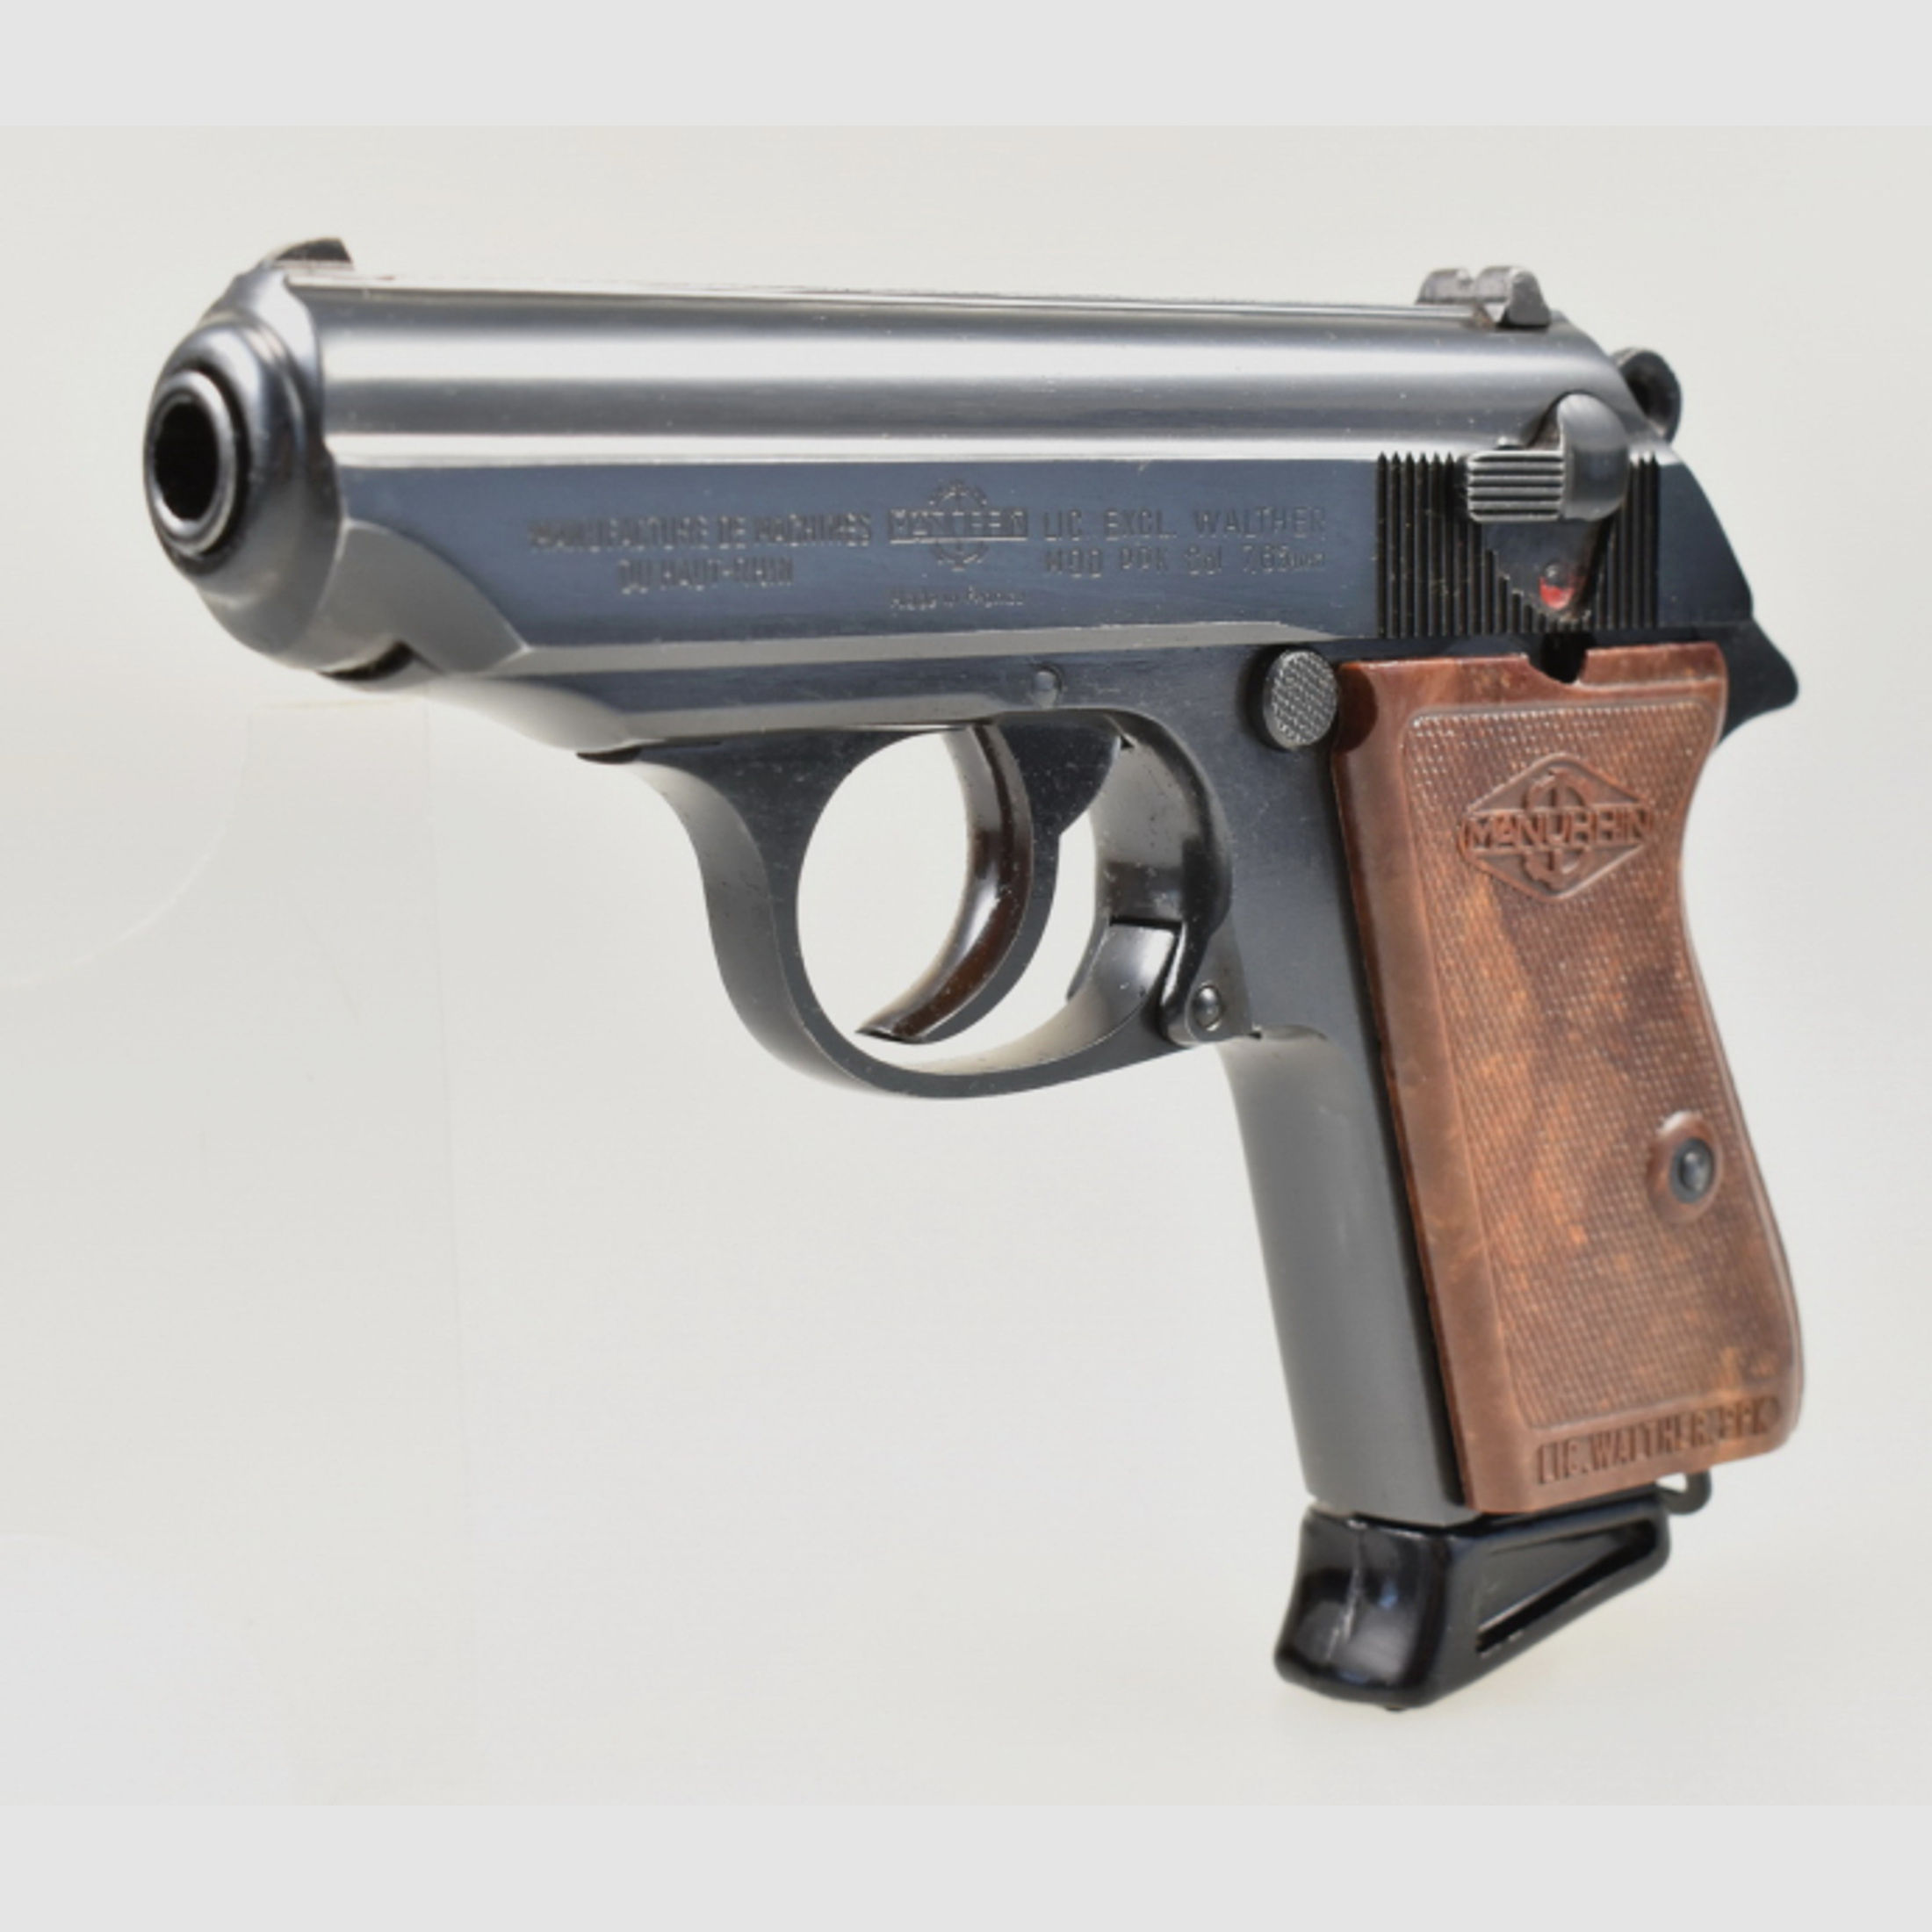 MANURHIN Pistole " Walther PPK " im Kaliber 7,65mm Browning